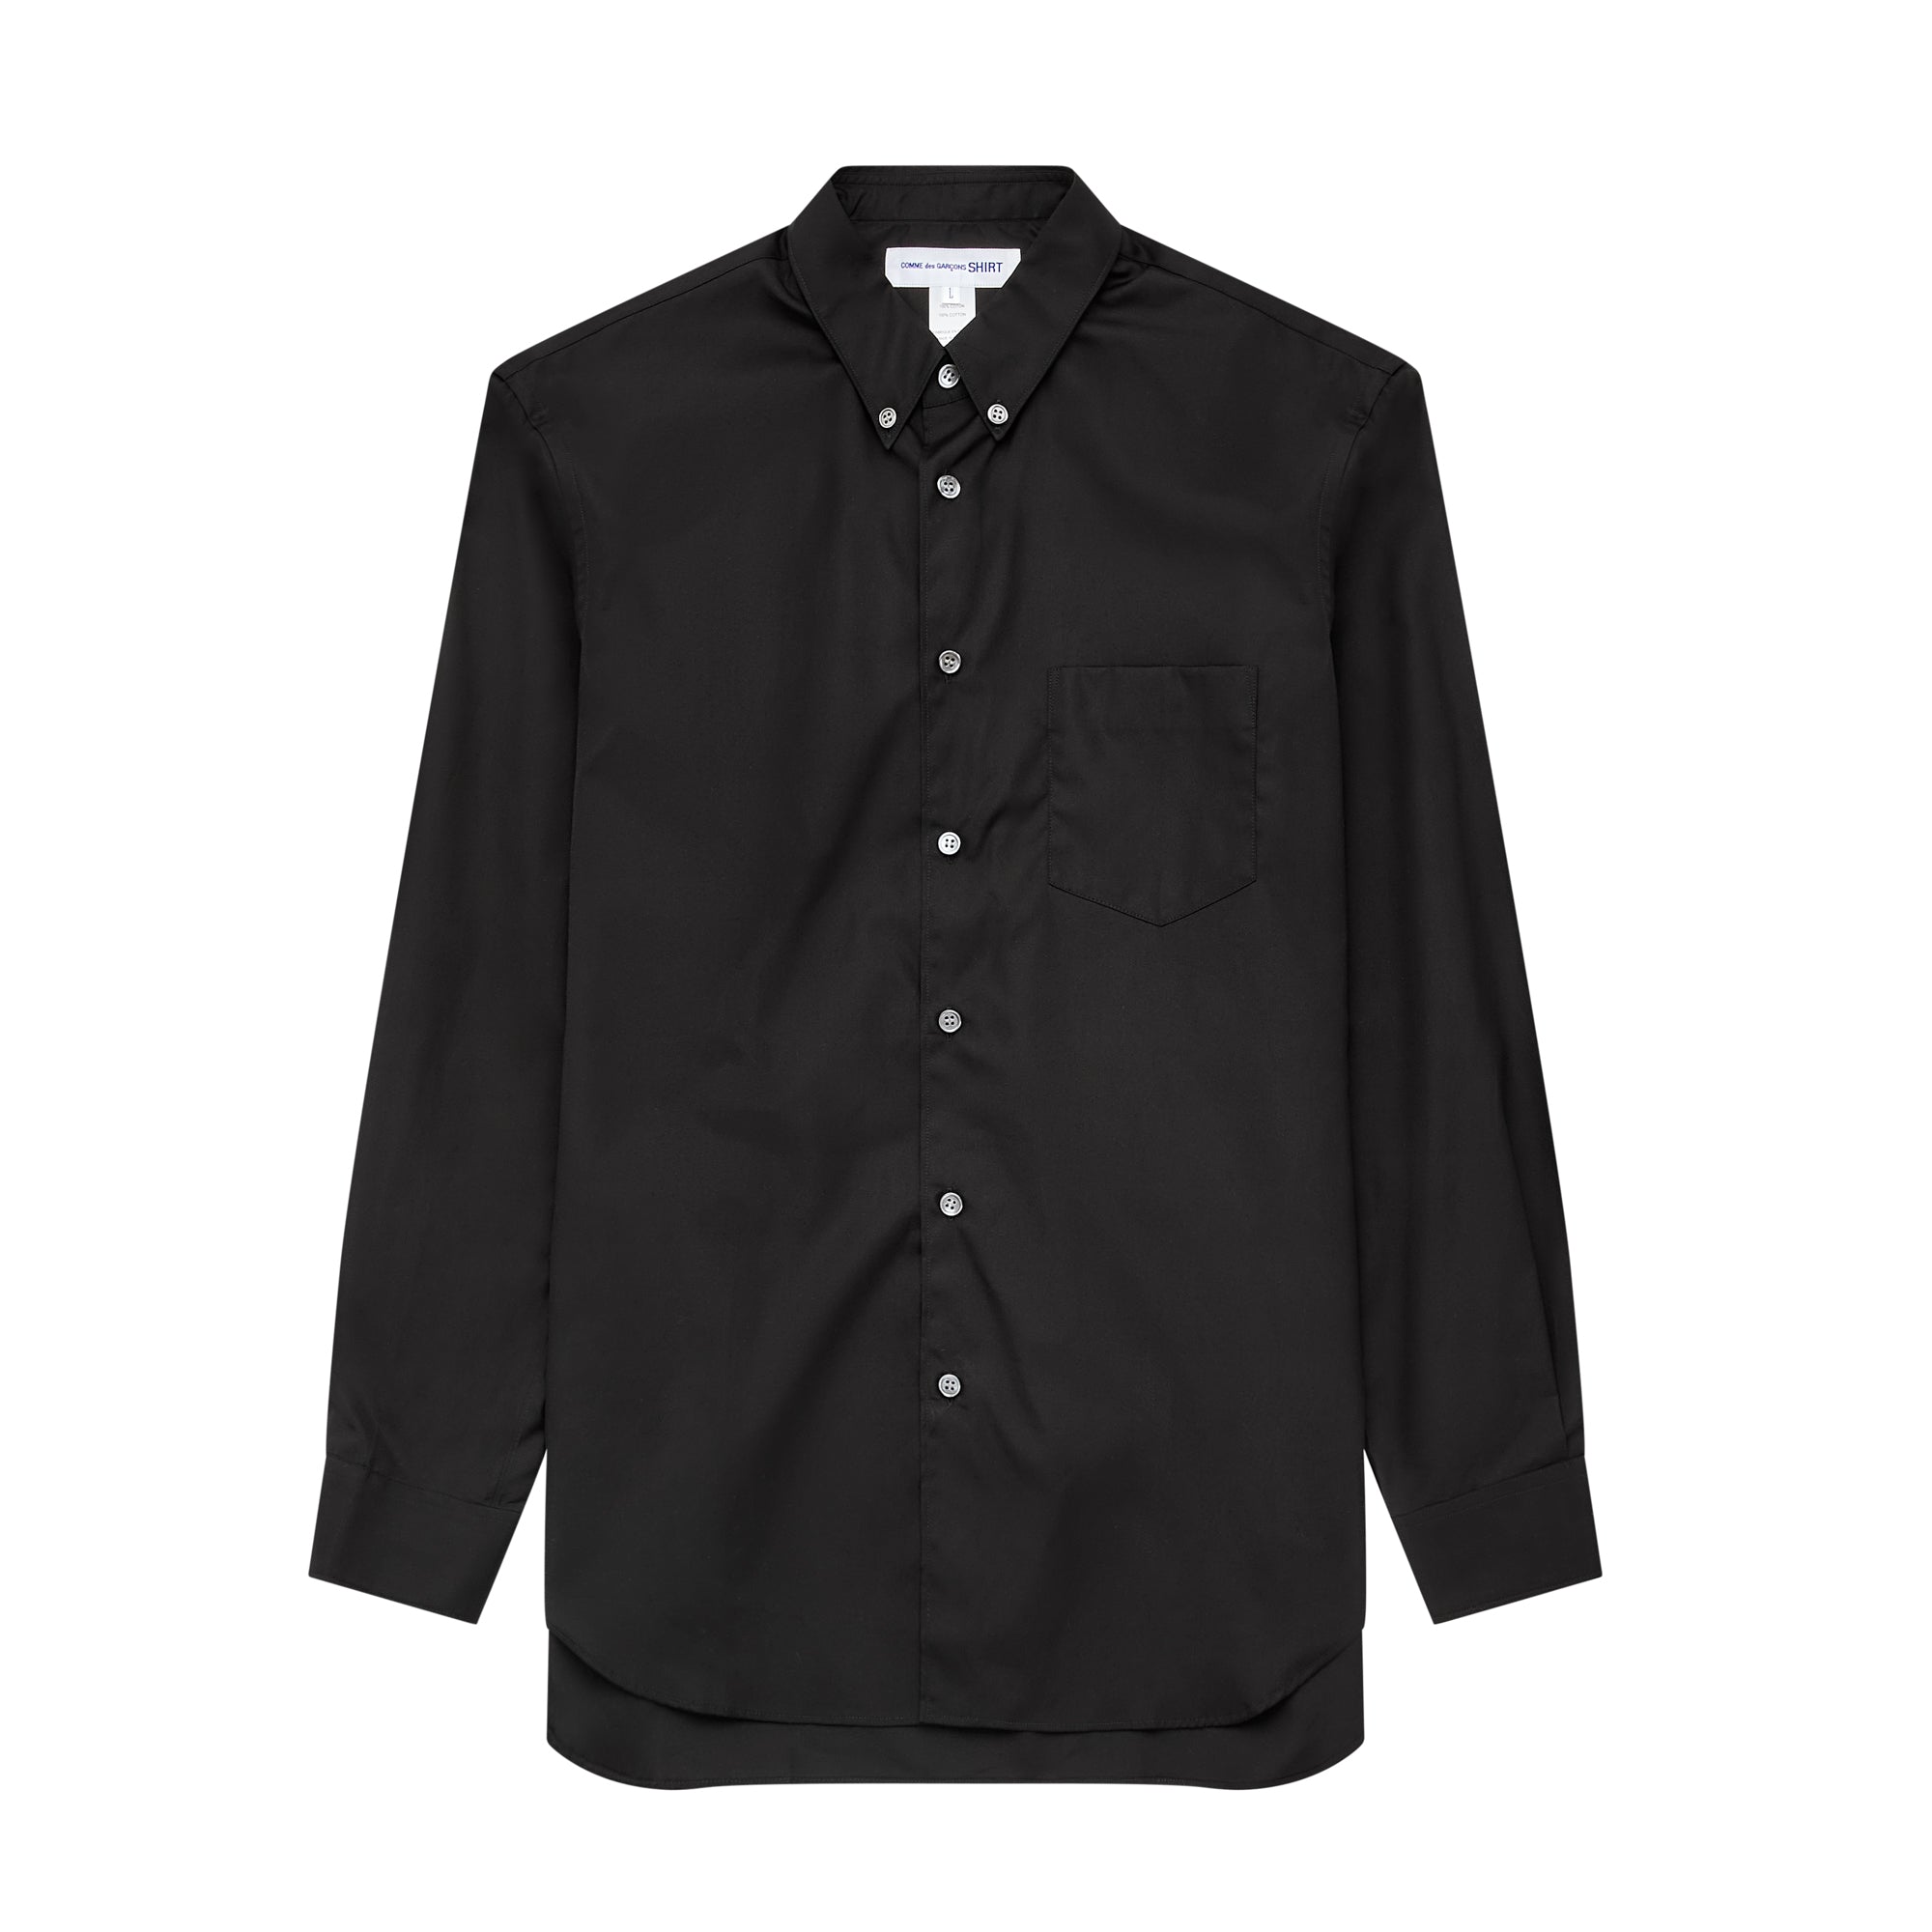 CDG Shirt Forever - Slim Fit Button-Down Cotton Shirt - (Black) view 1